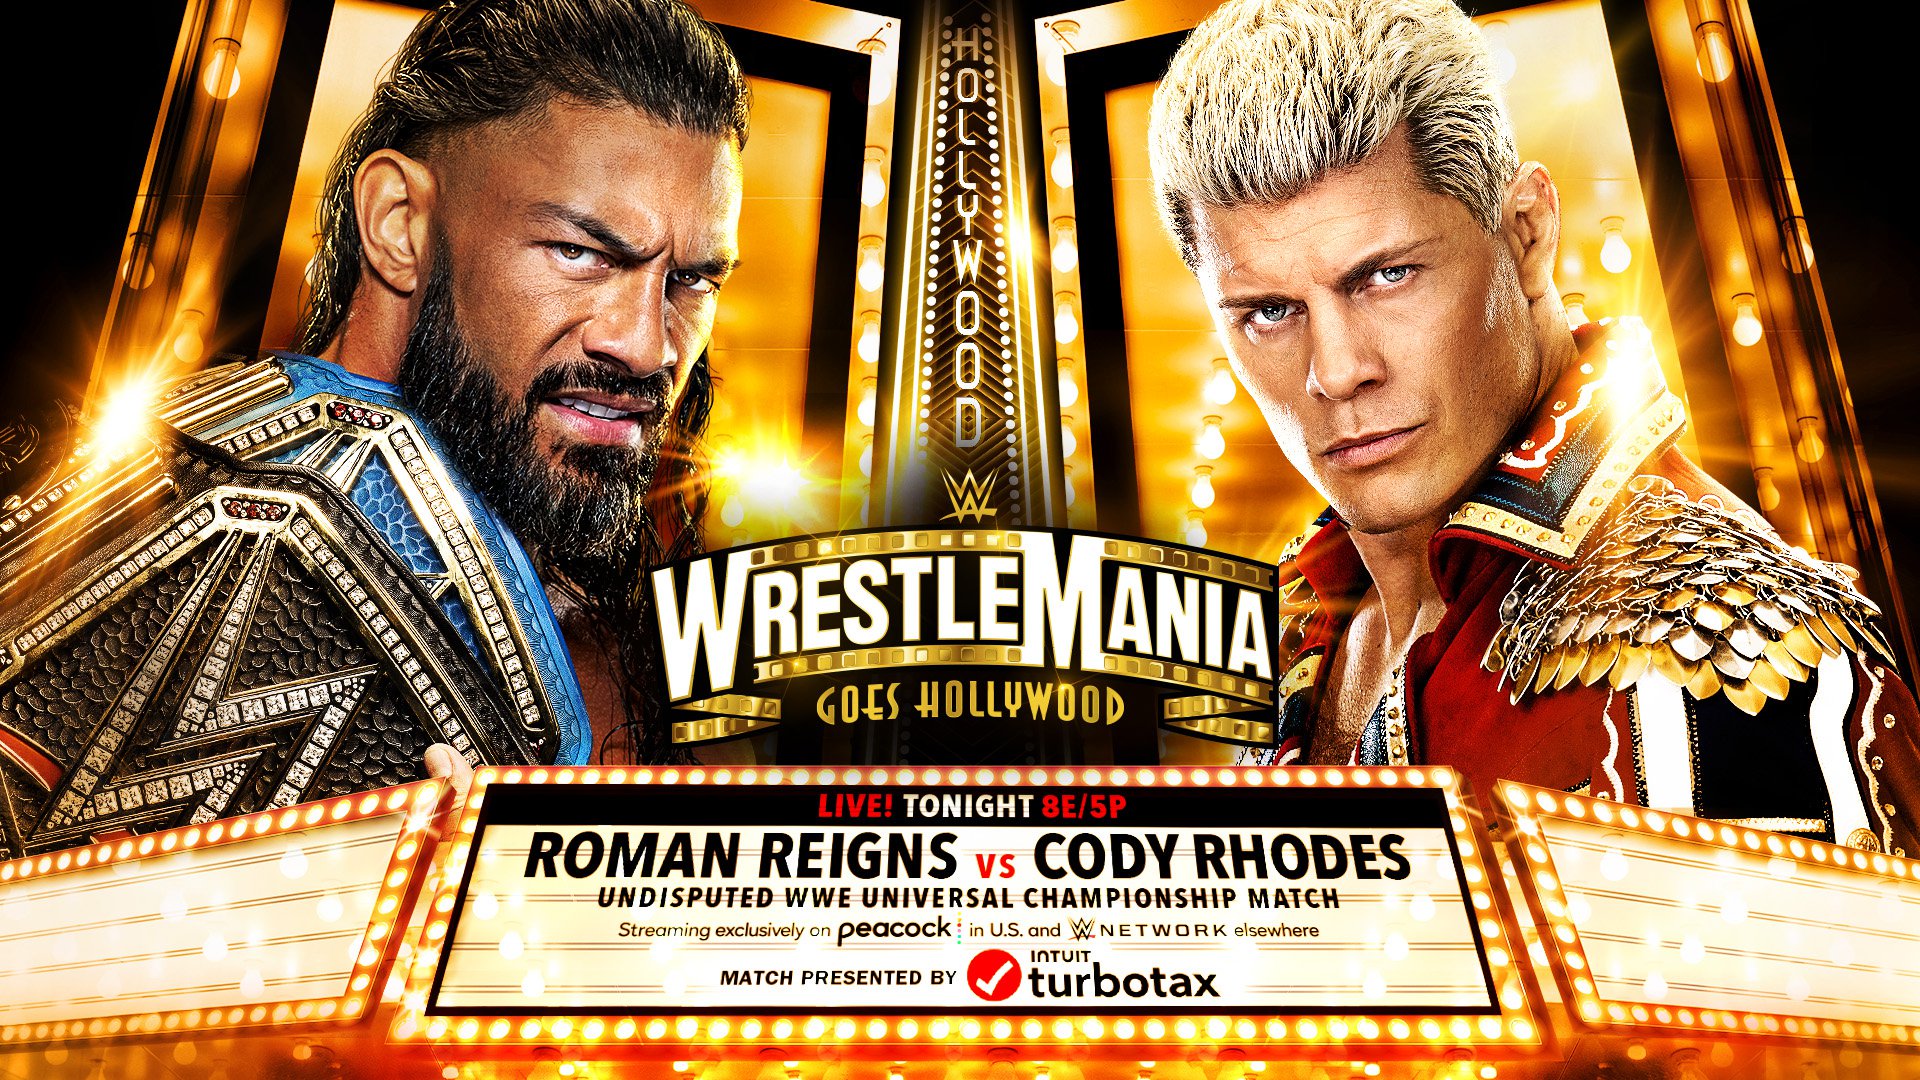 Undisputed WWE Universal Champion Roman Reigns vs. Cody Rhodes WWE